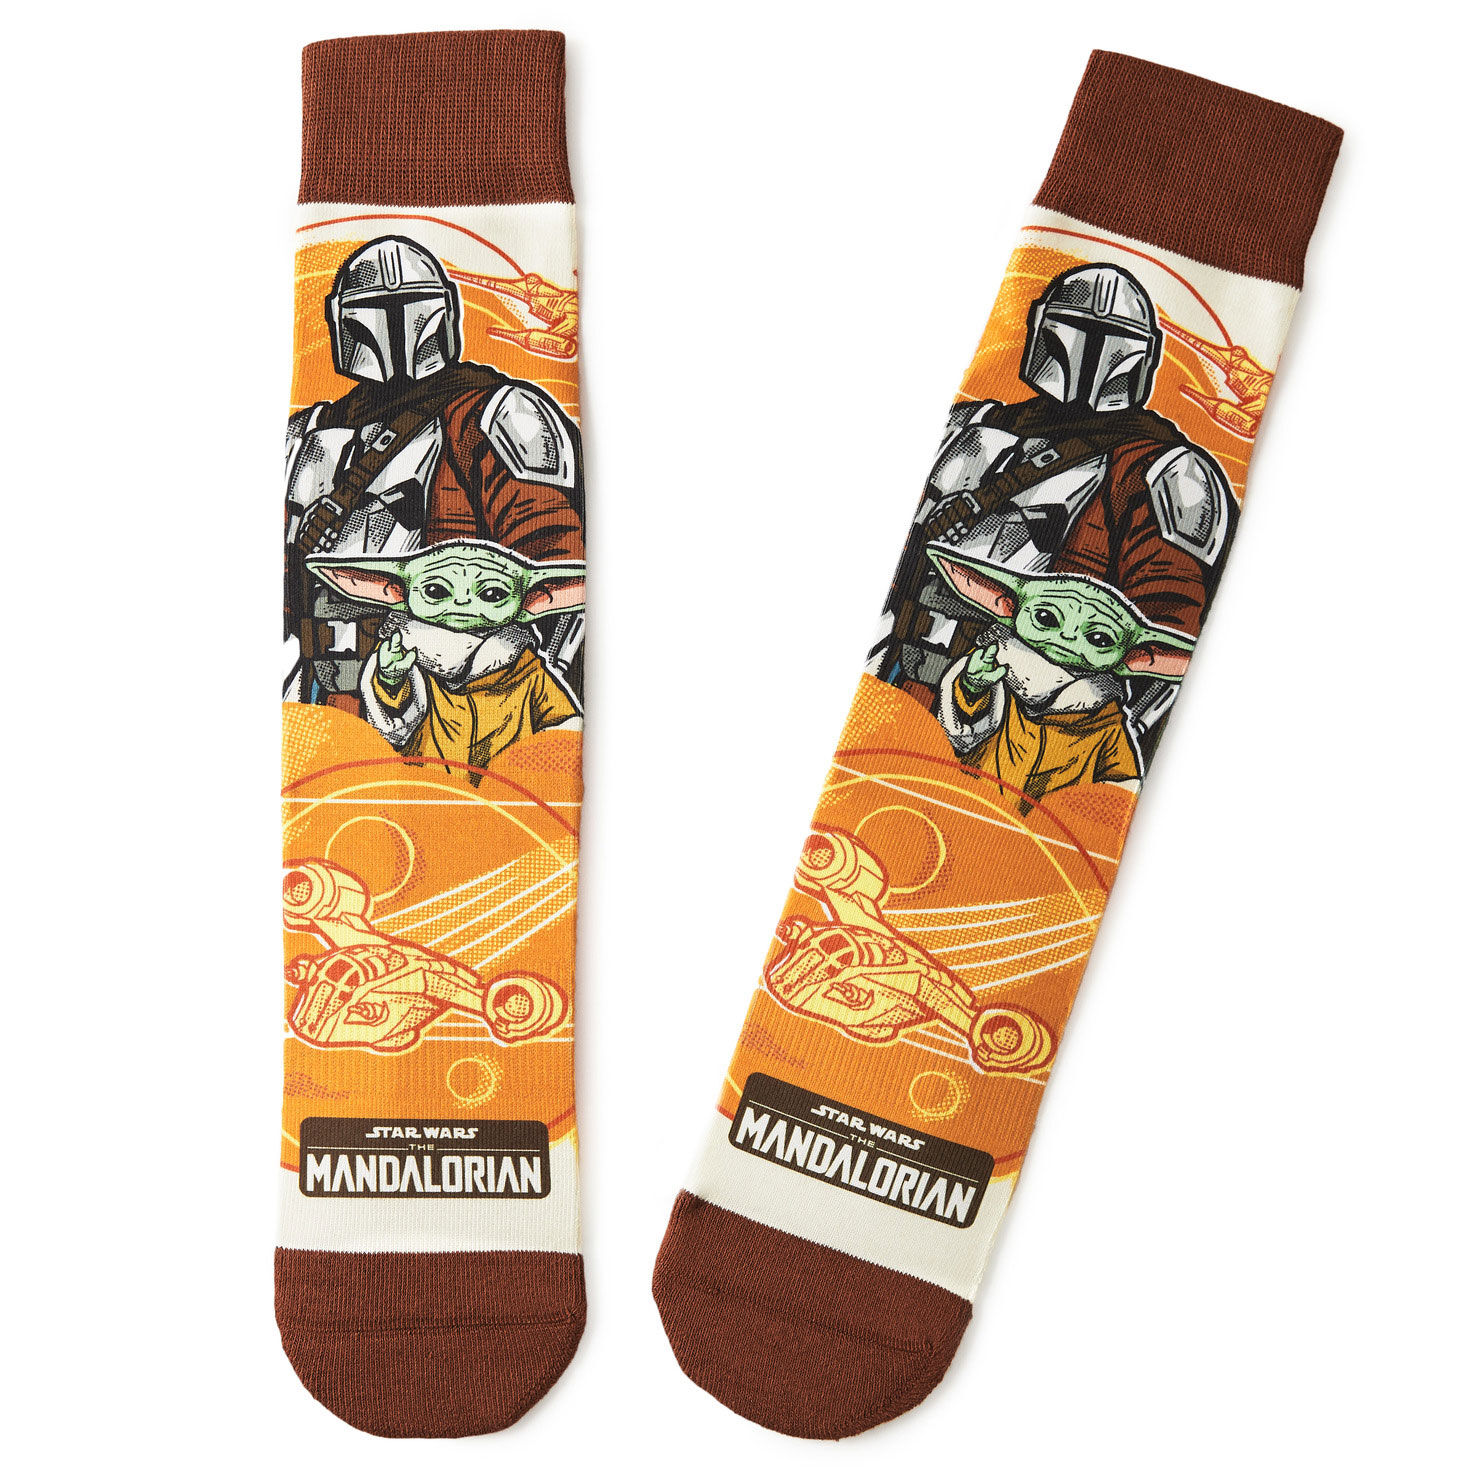 Star Wars: The Mandalorian™ and Grogu™ Novelty Crew Socks for only USD 14.99 | Hallmark